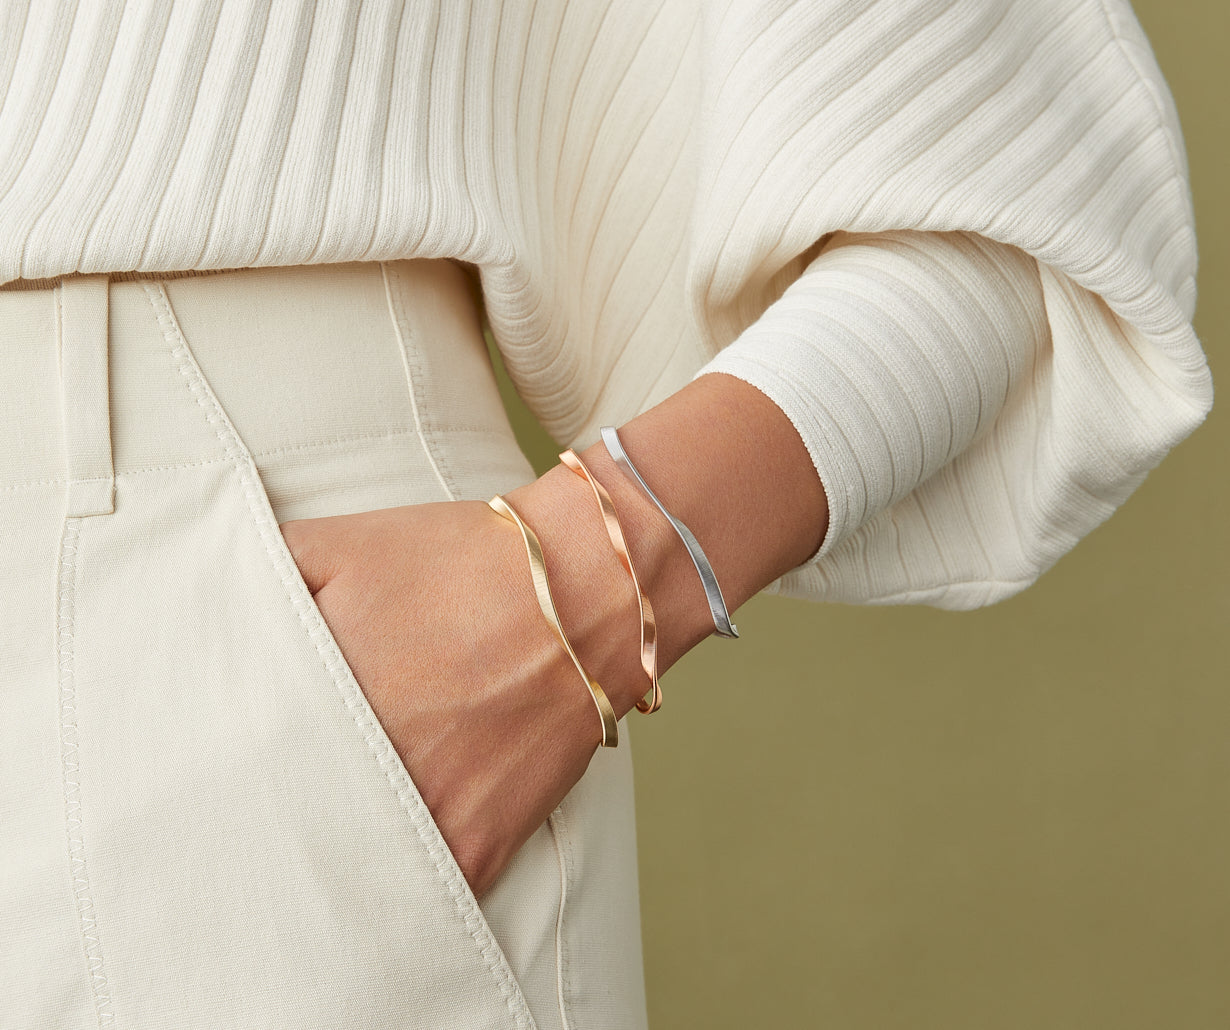 18k white gold one strand bracelet by Marco Bicego